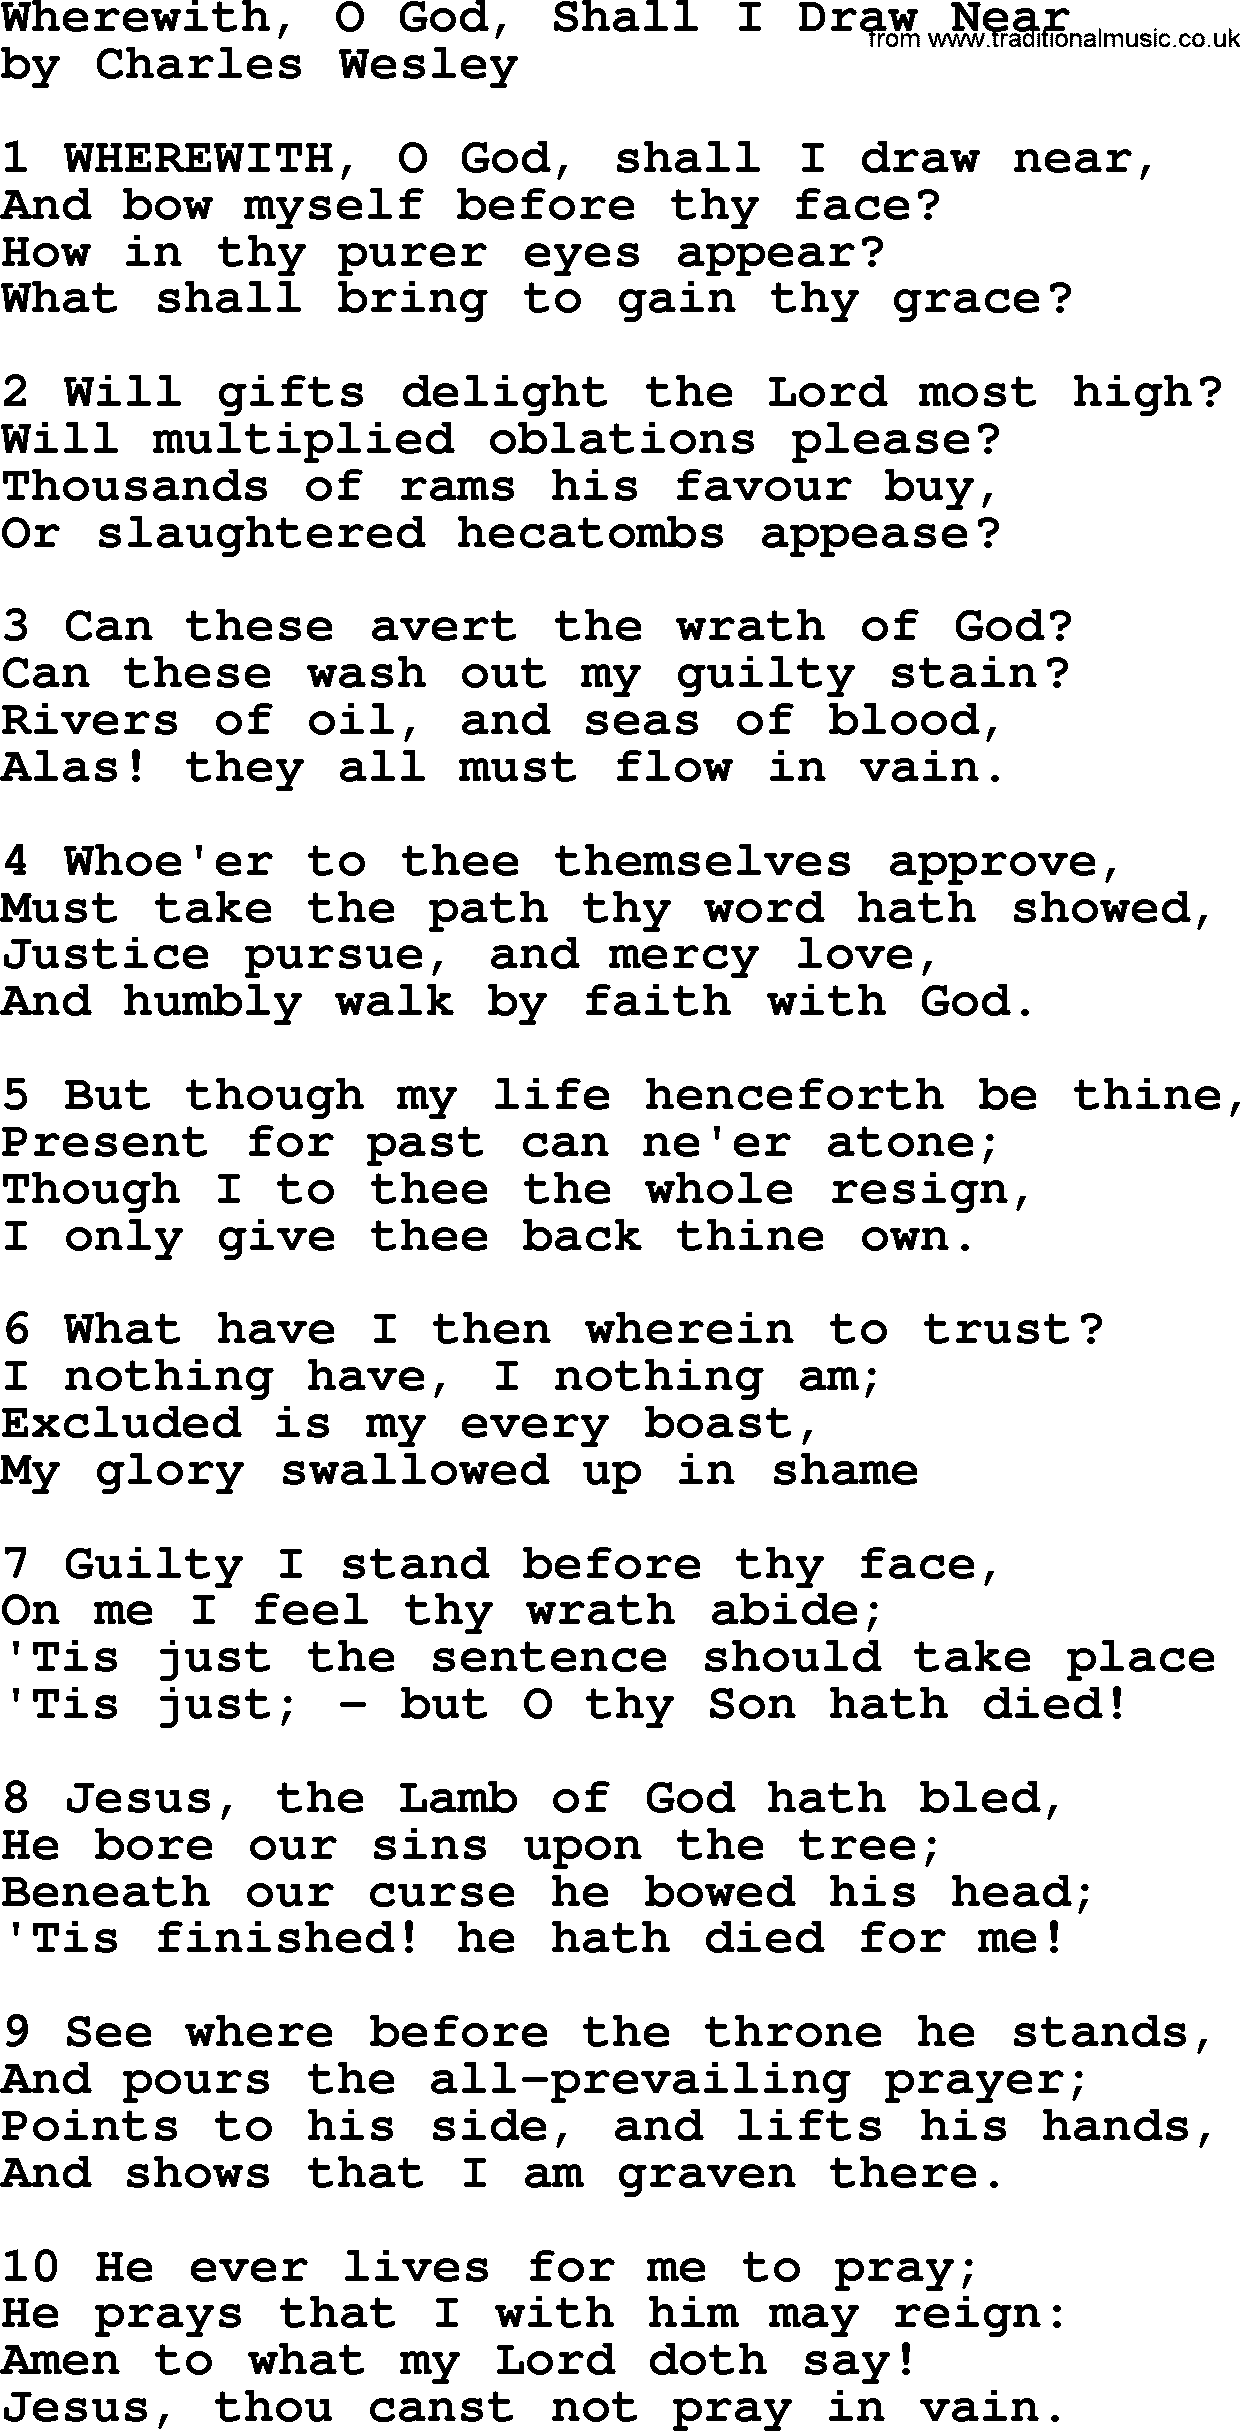 Charles Wesley hymn: Wherewith, O God, Shall I Draw Near, lyrics